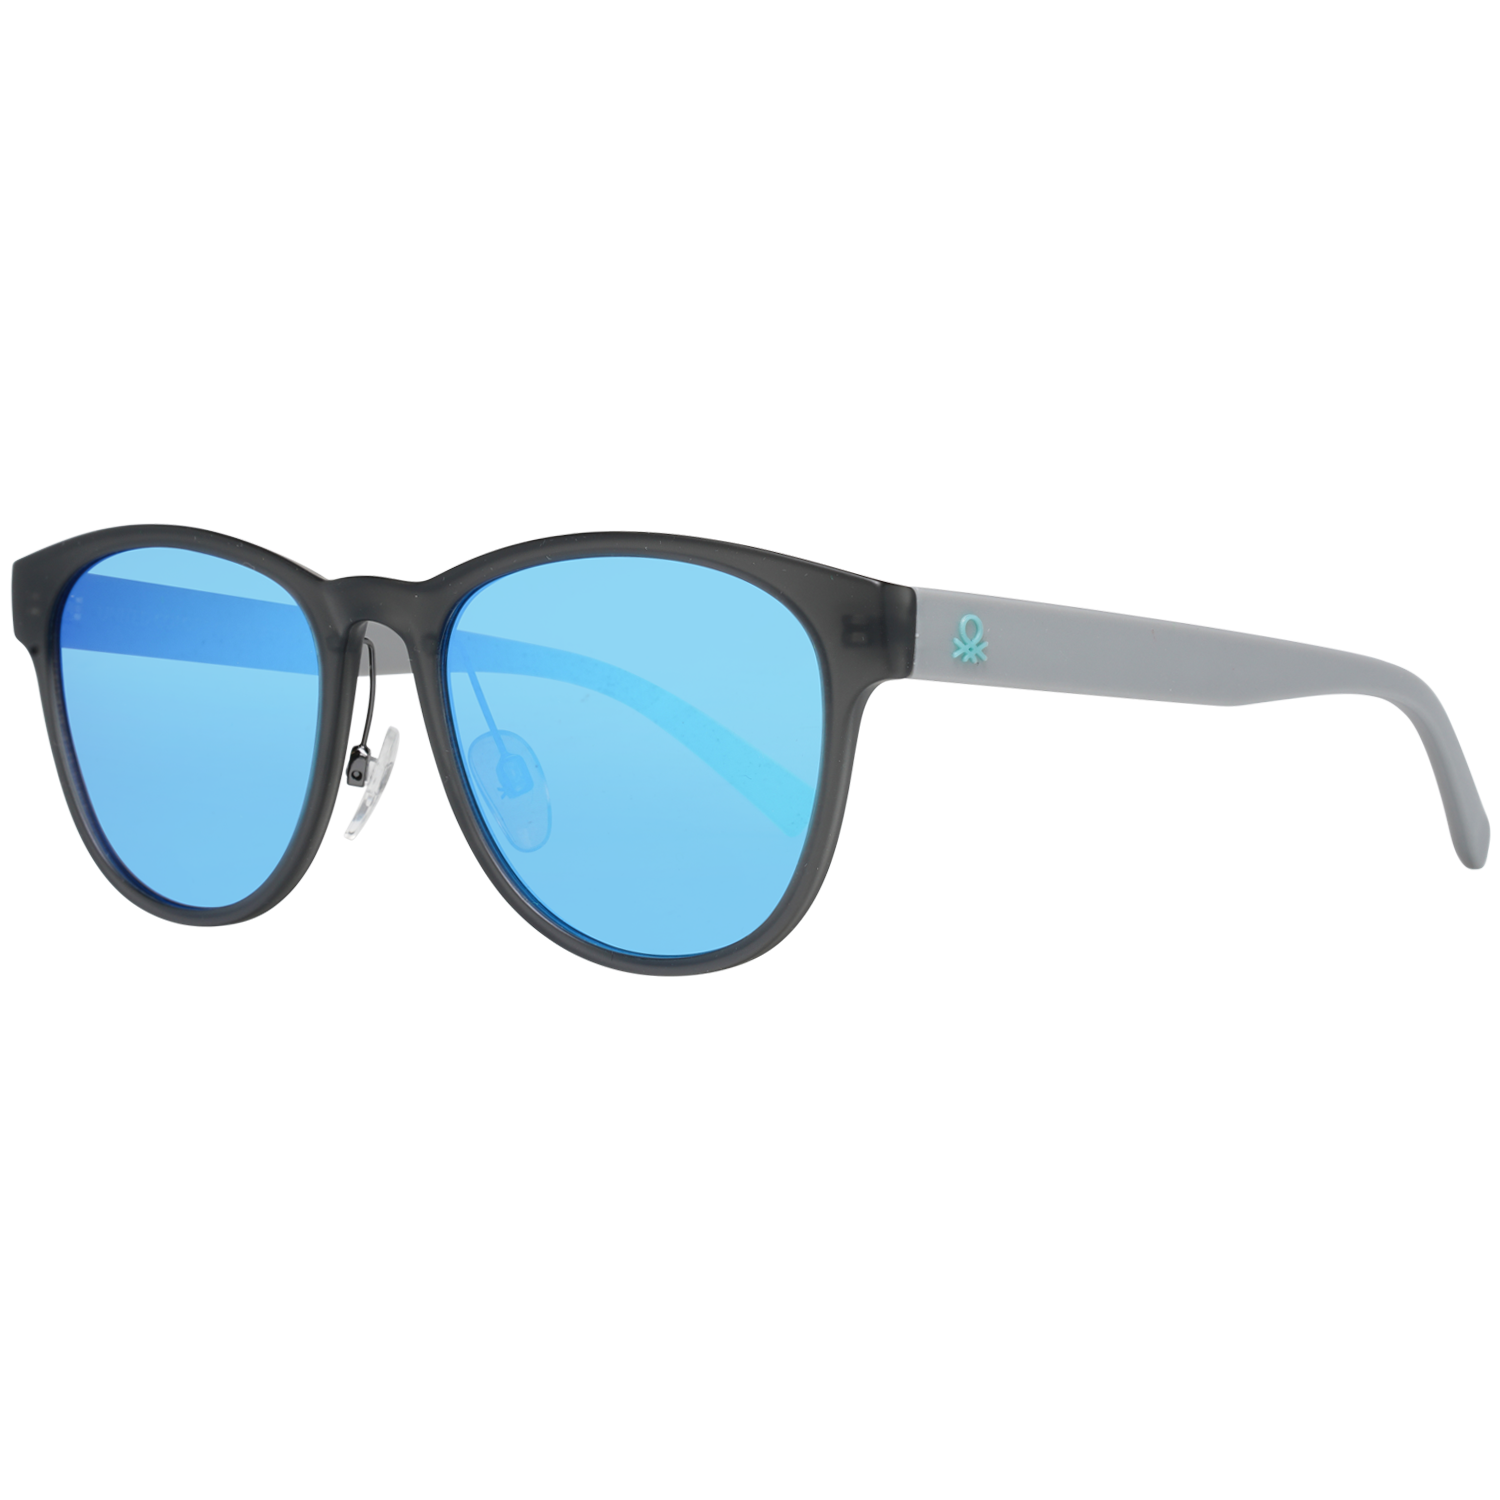 Benetton Sunglasses BE5011 910 55 Grey